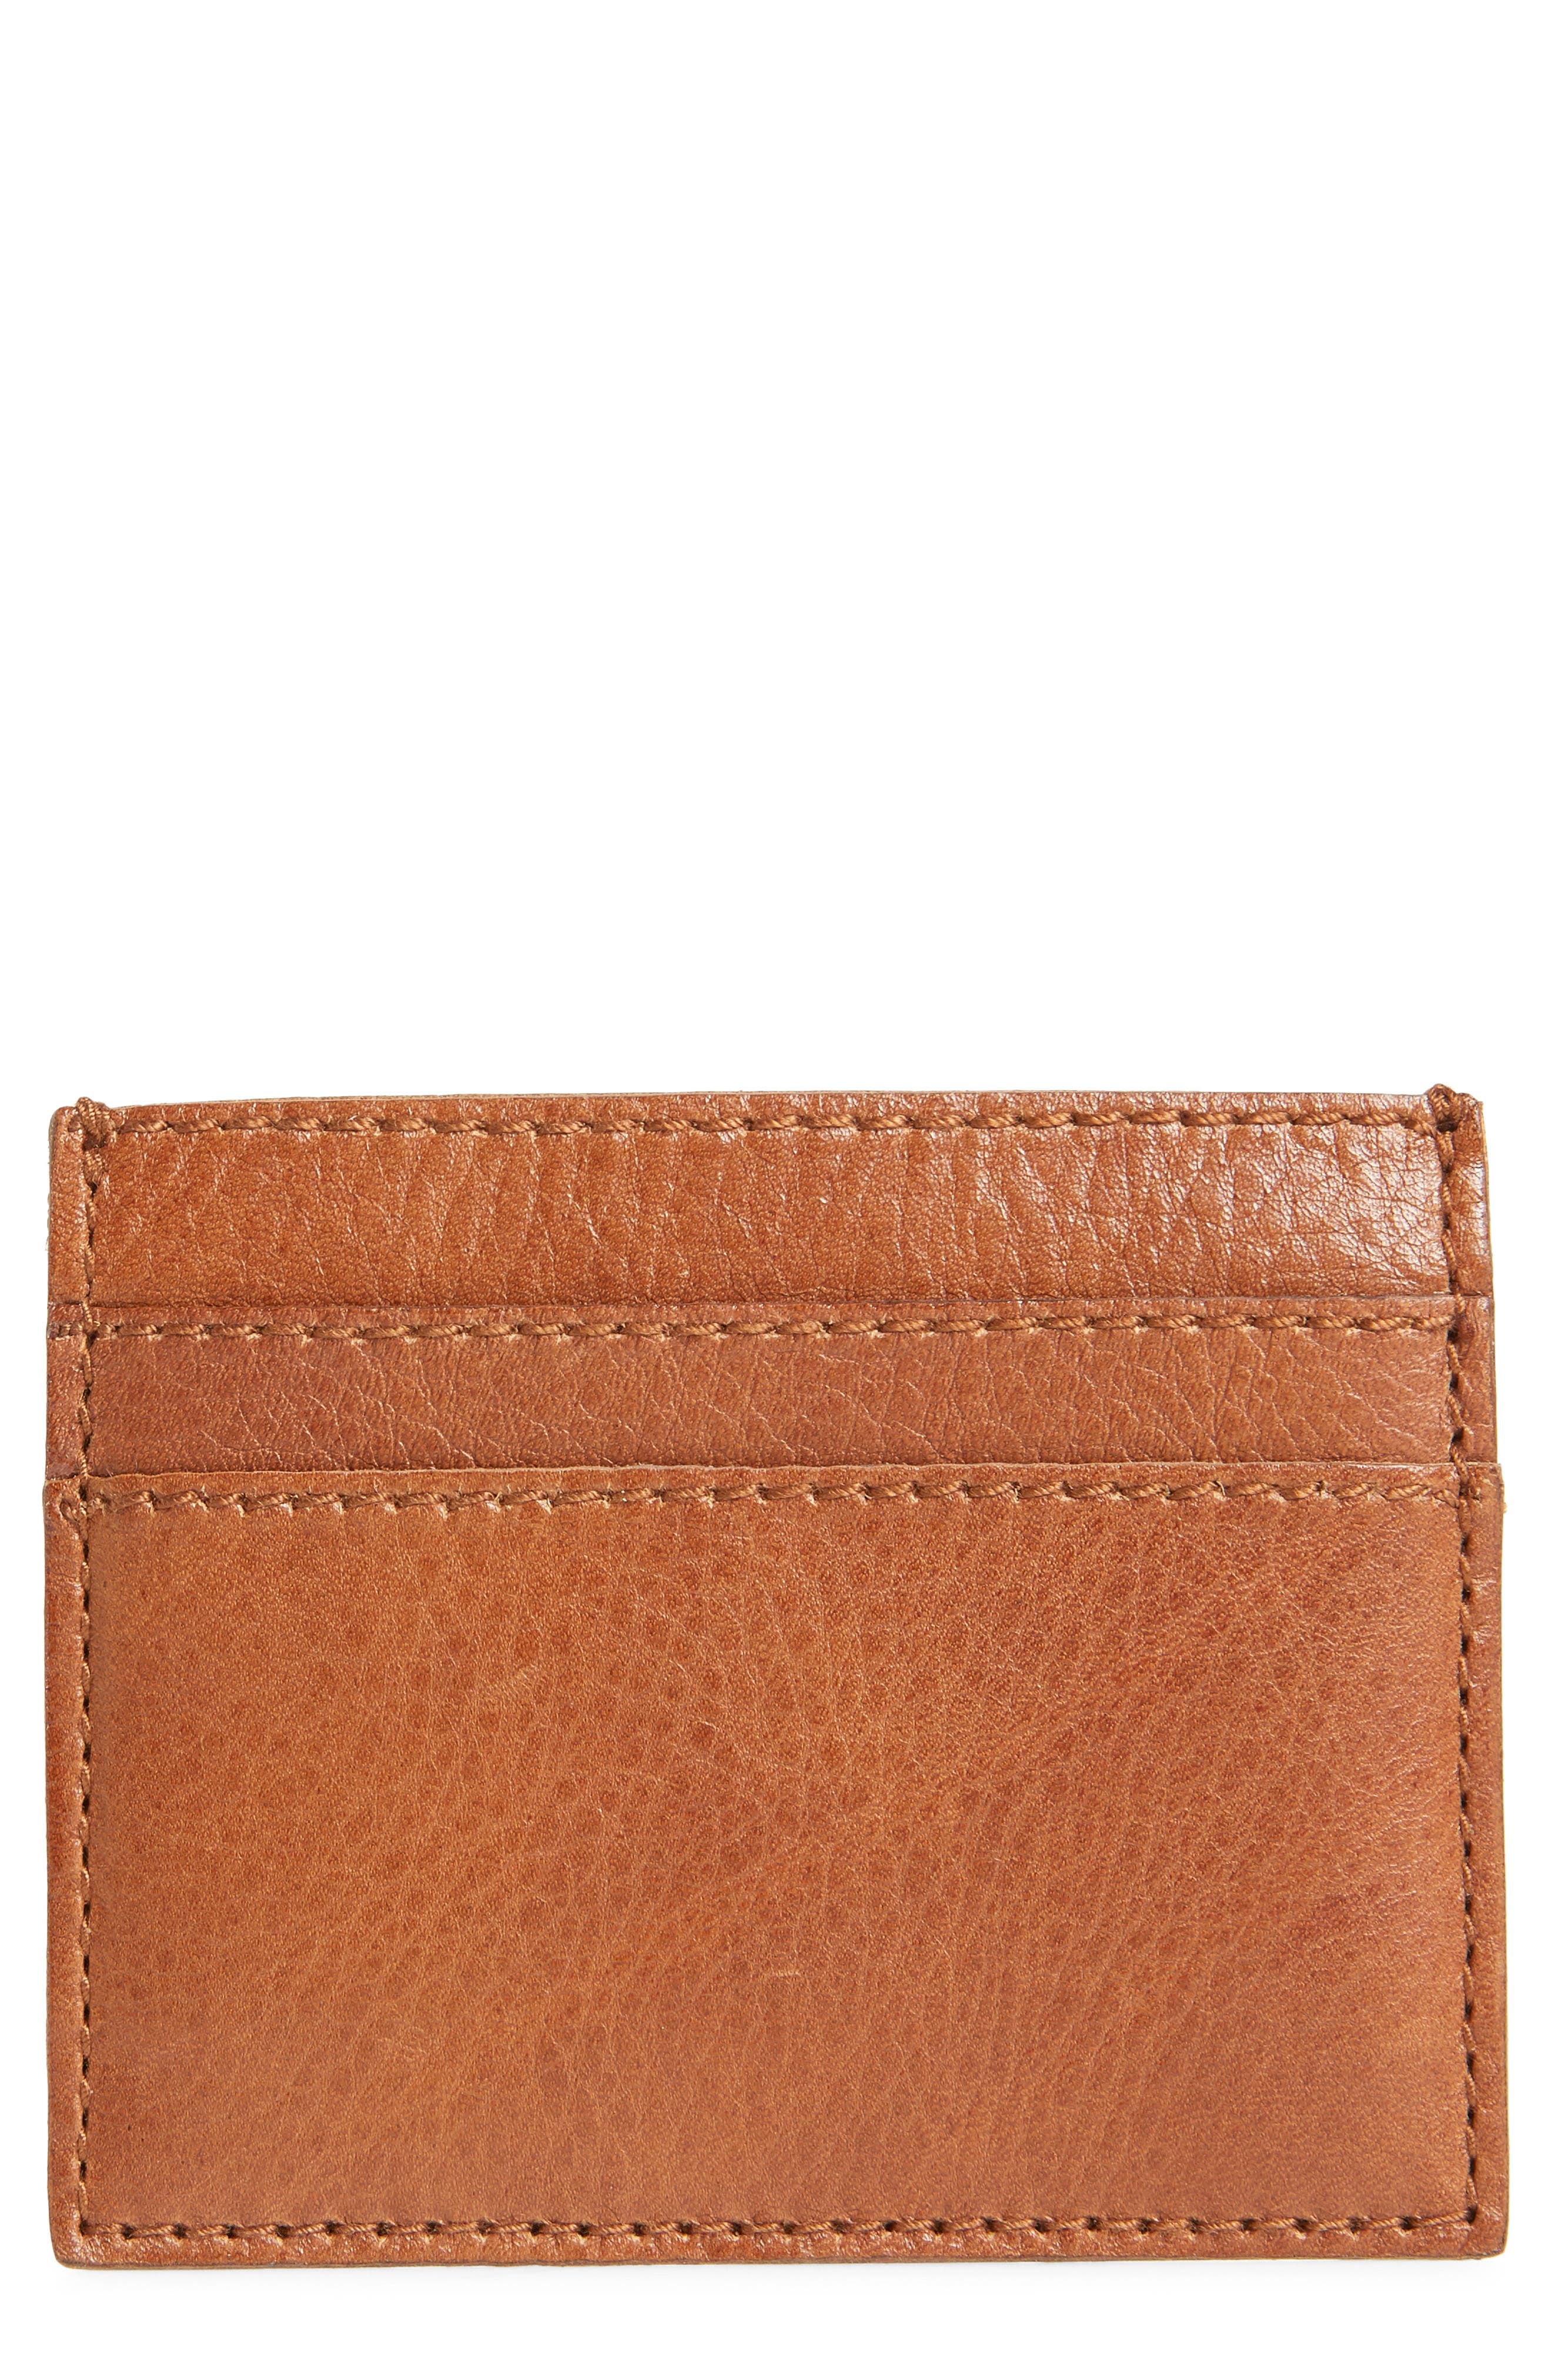 Blue BOX-7 Women's Pouch Wallet with Tassels Universal Thread